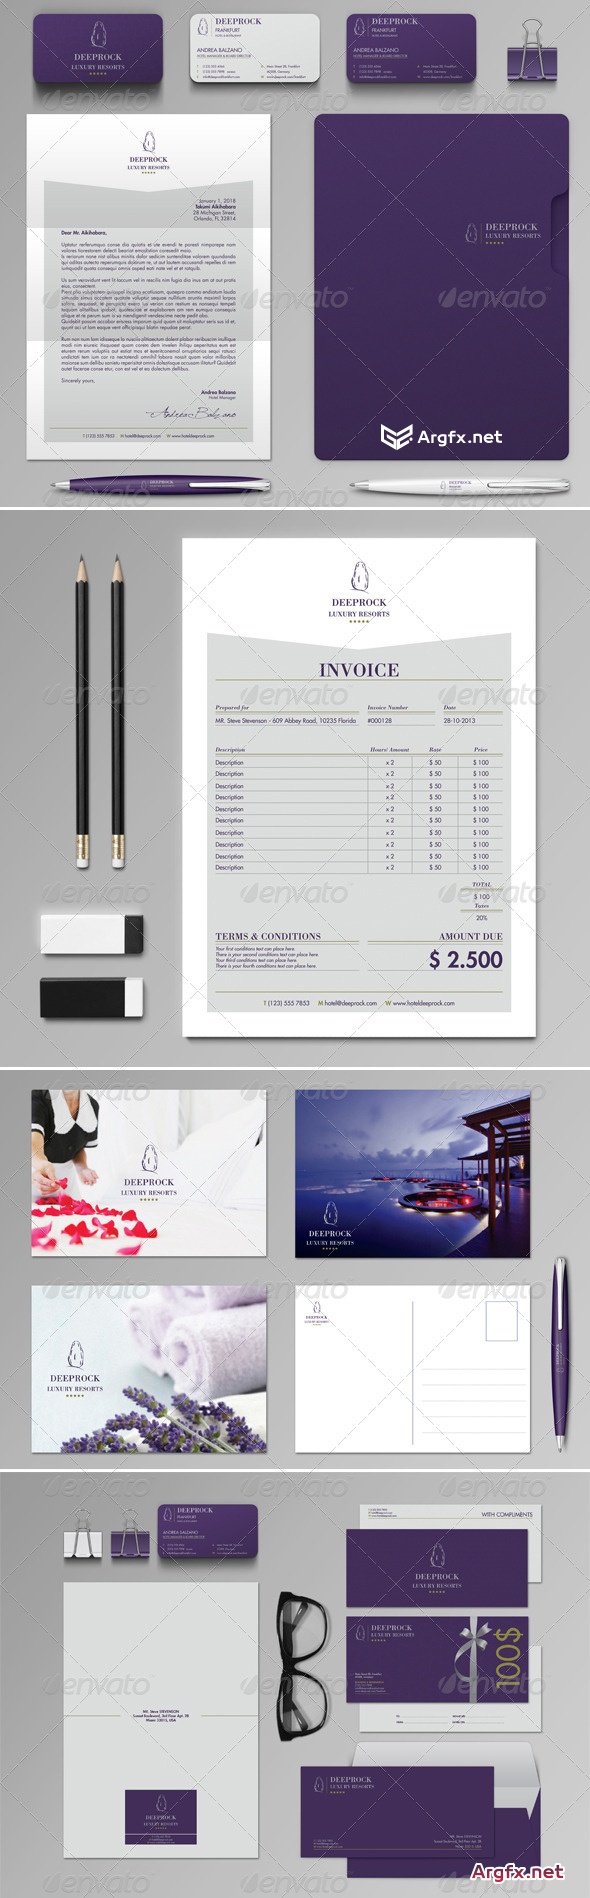 GraphicRiver - Deeprock Stationery Set & Invoice Template 8770885